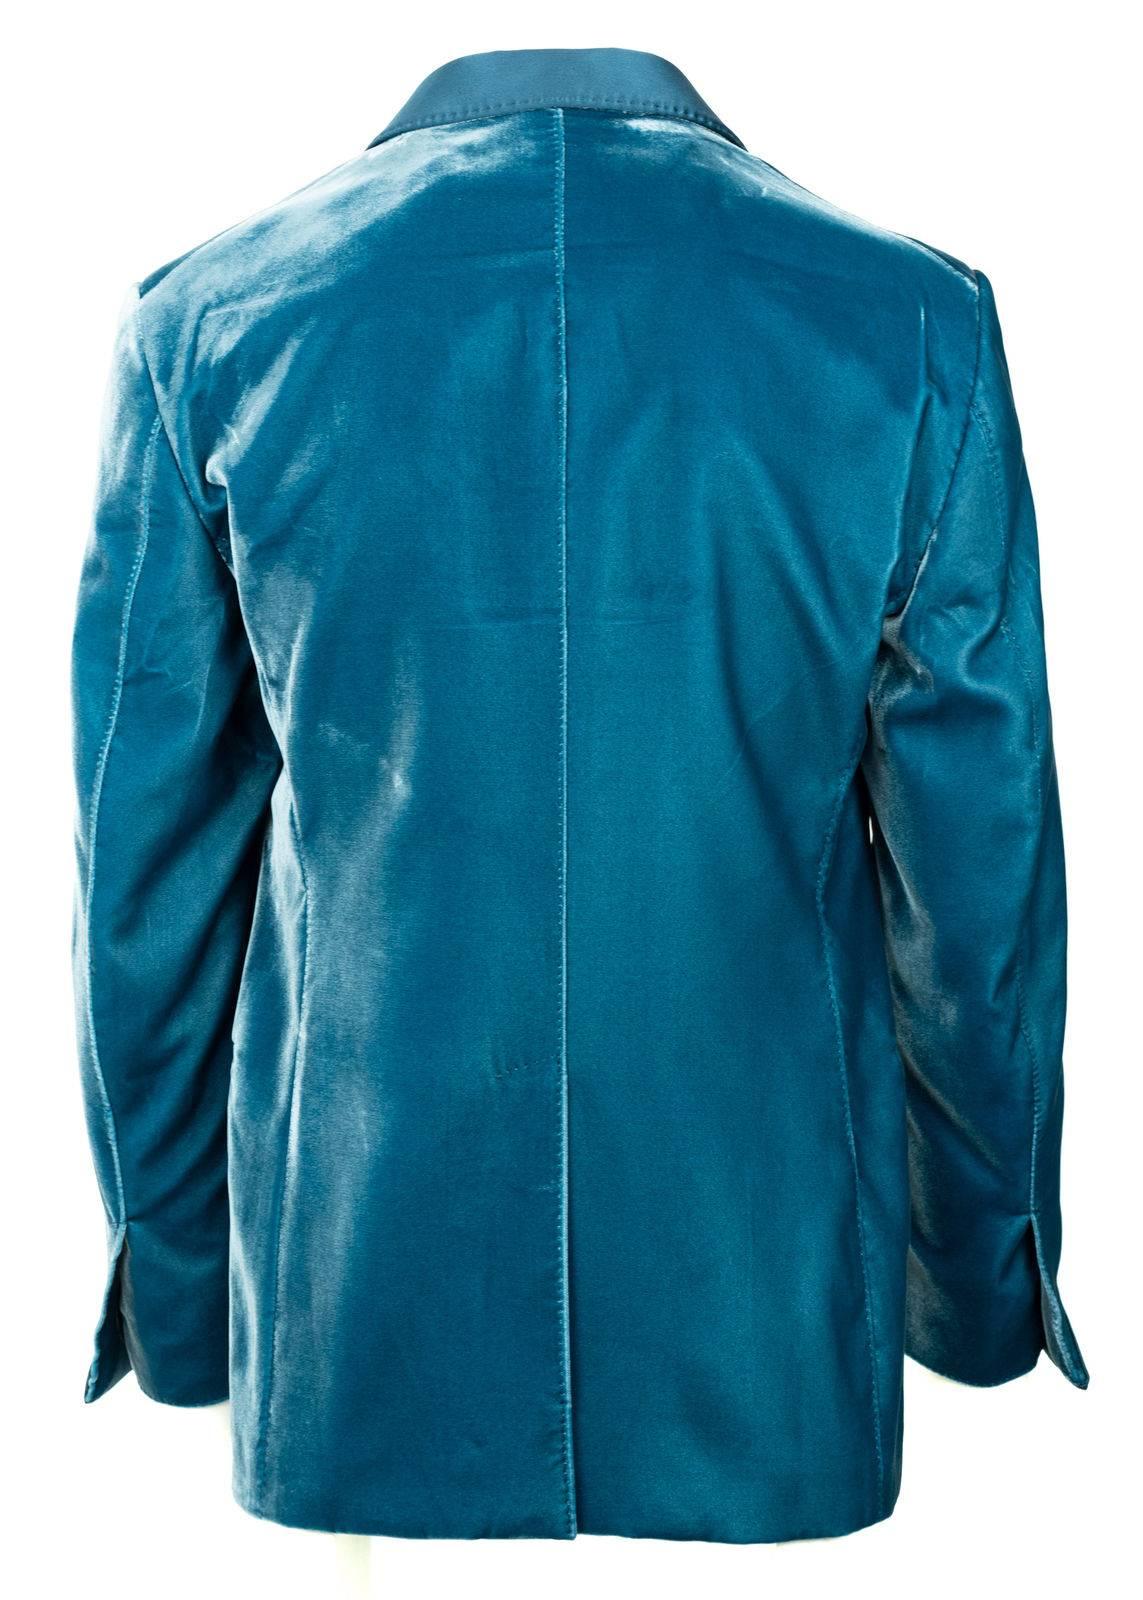 Men's Tom Ford Aqua Blue Velvet Shawl Lapel Shelton Cocktail Jacket Sz46R/36R RTL$3980 For Sale